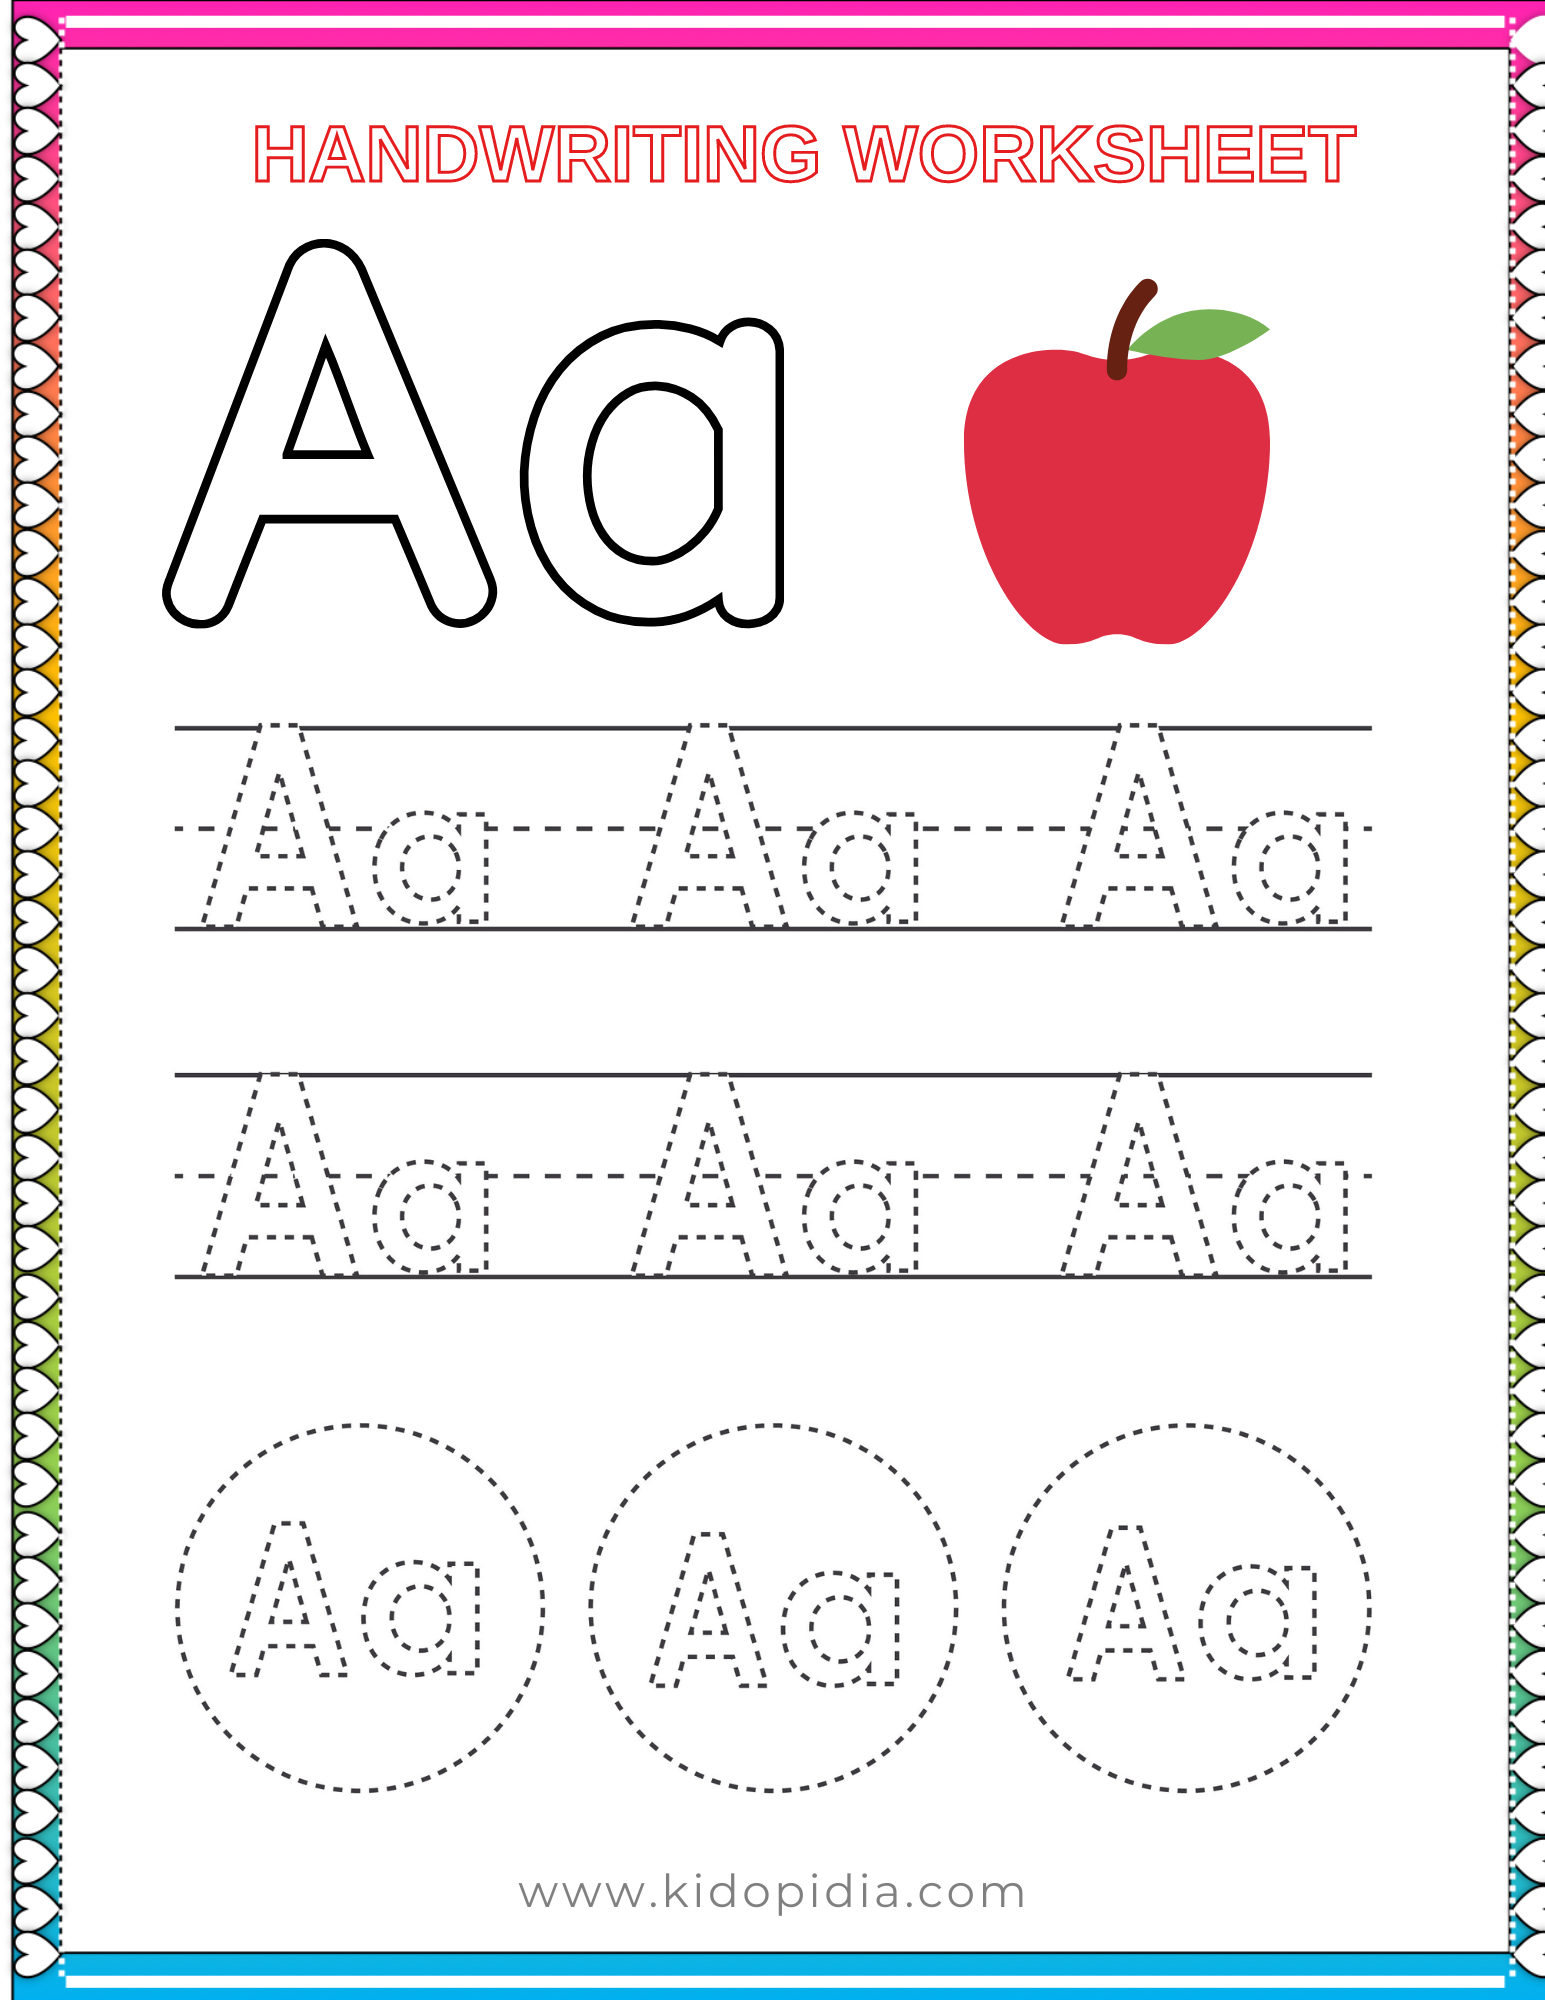 ABC-Handwriting-Worksheet.pdf